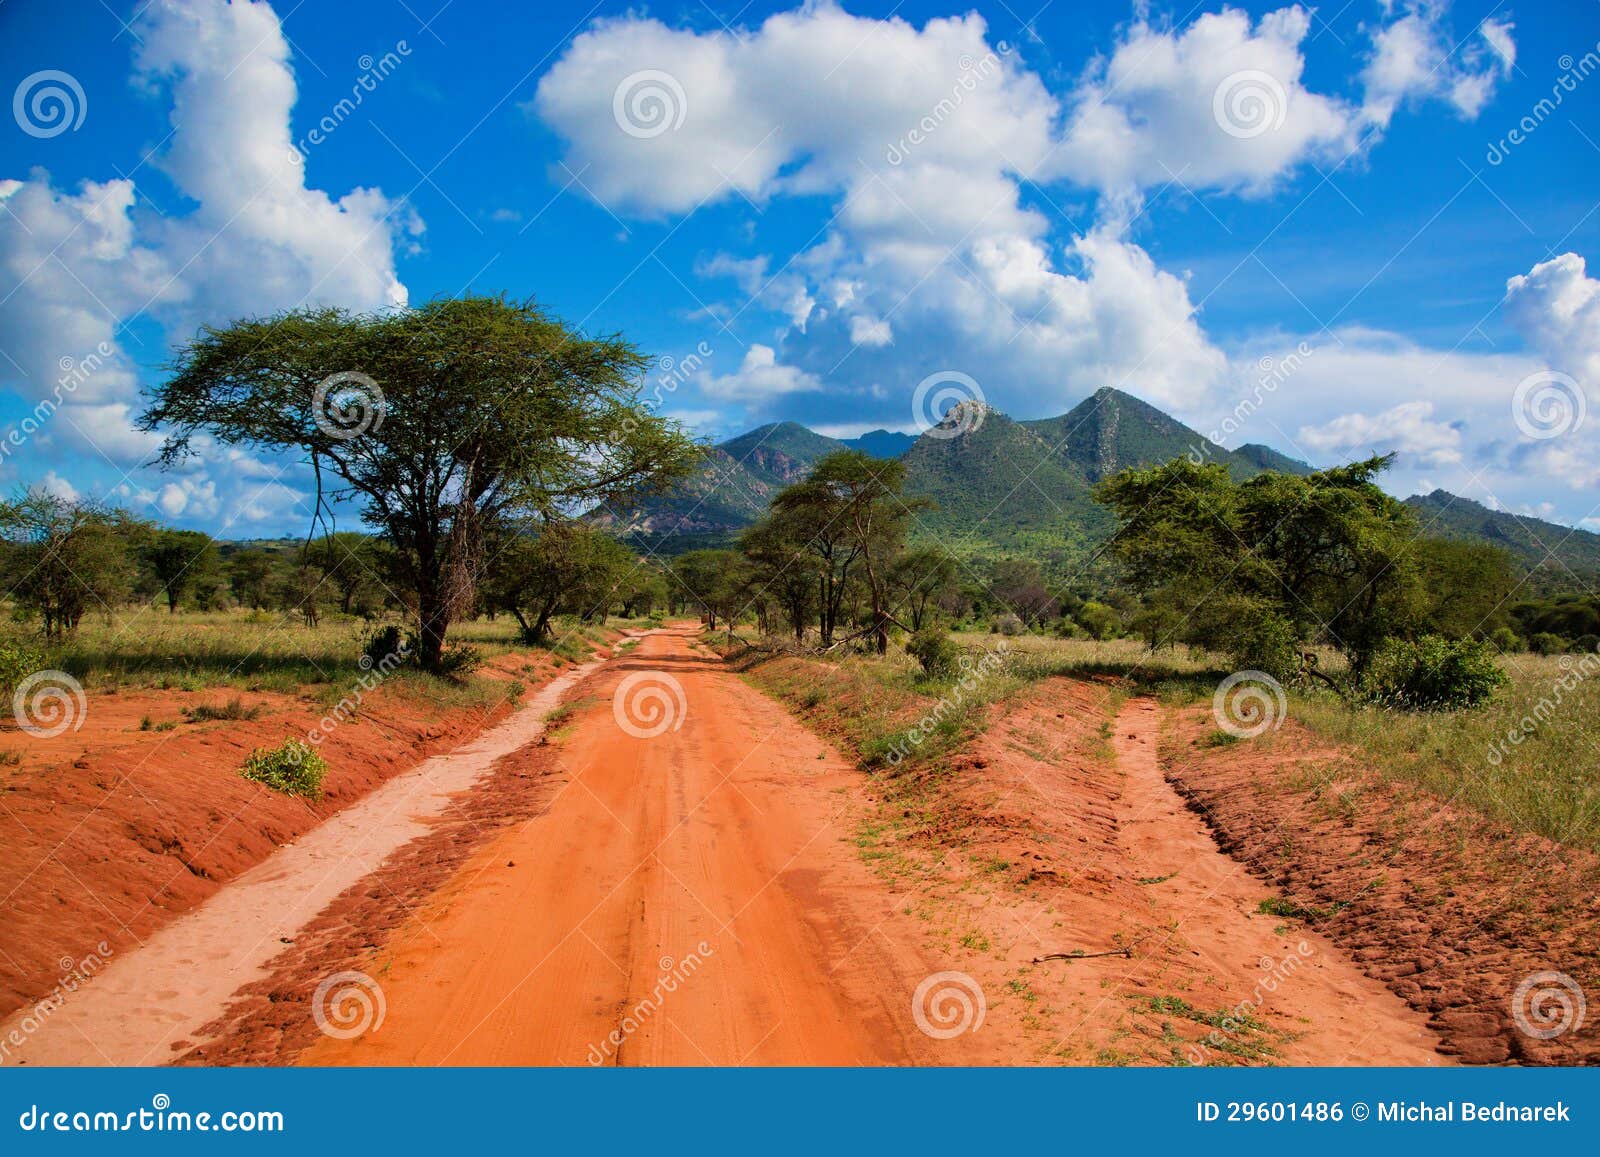 red ground road, bush with savanna. tsavo west, kenya, africa